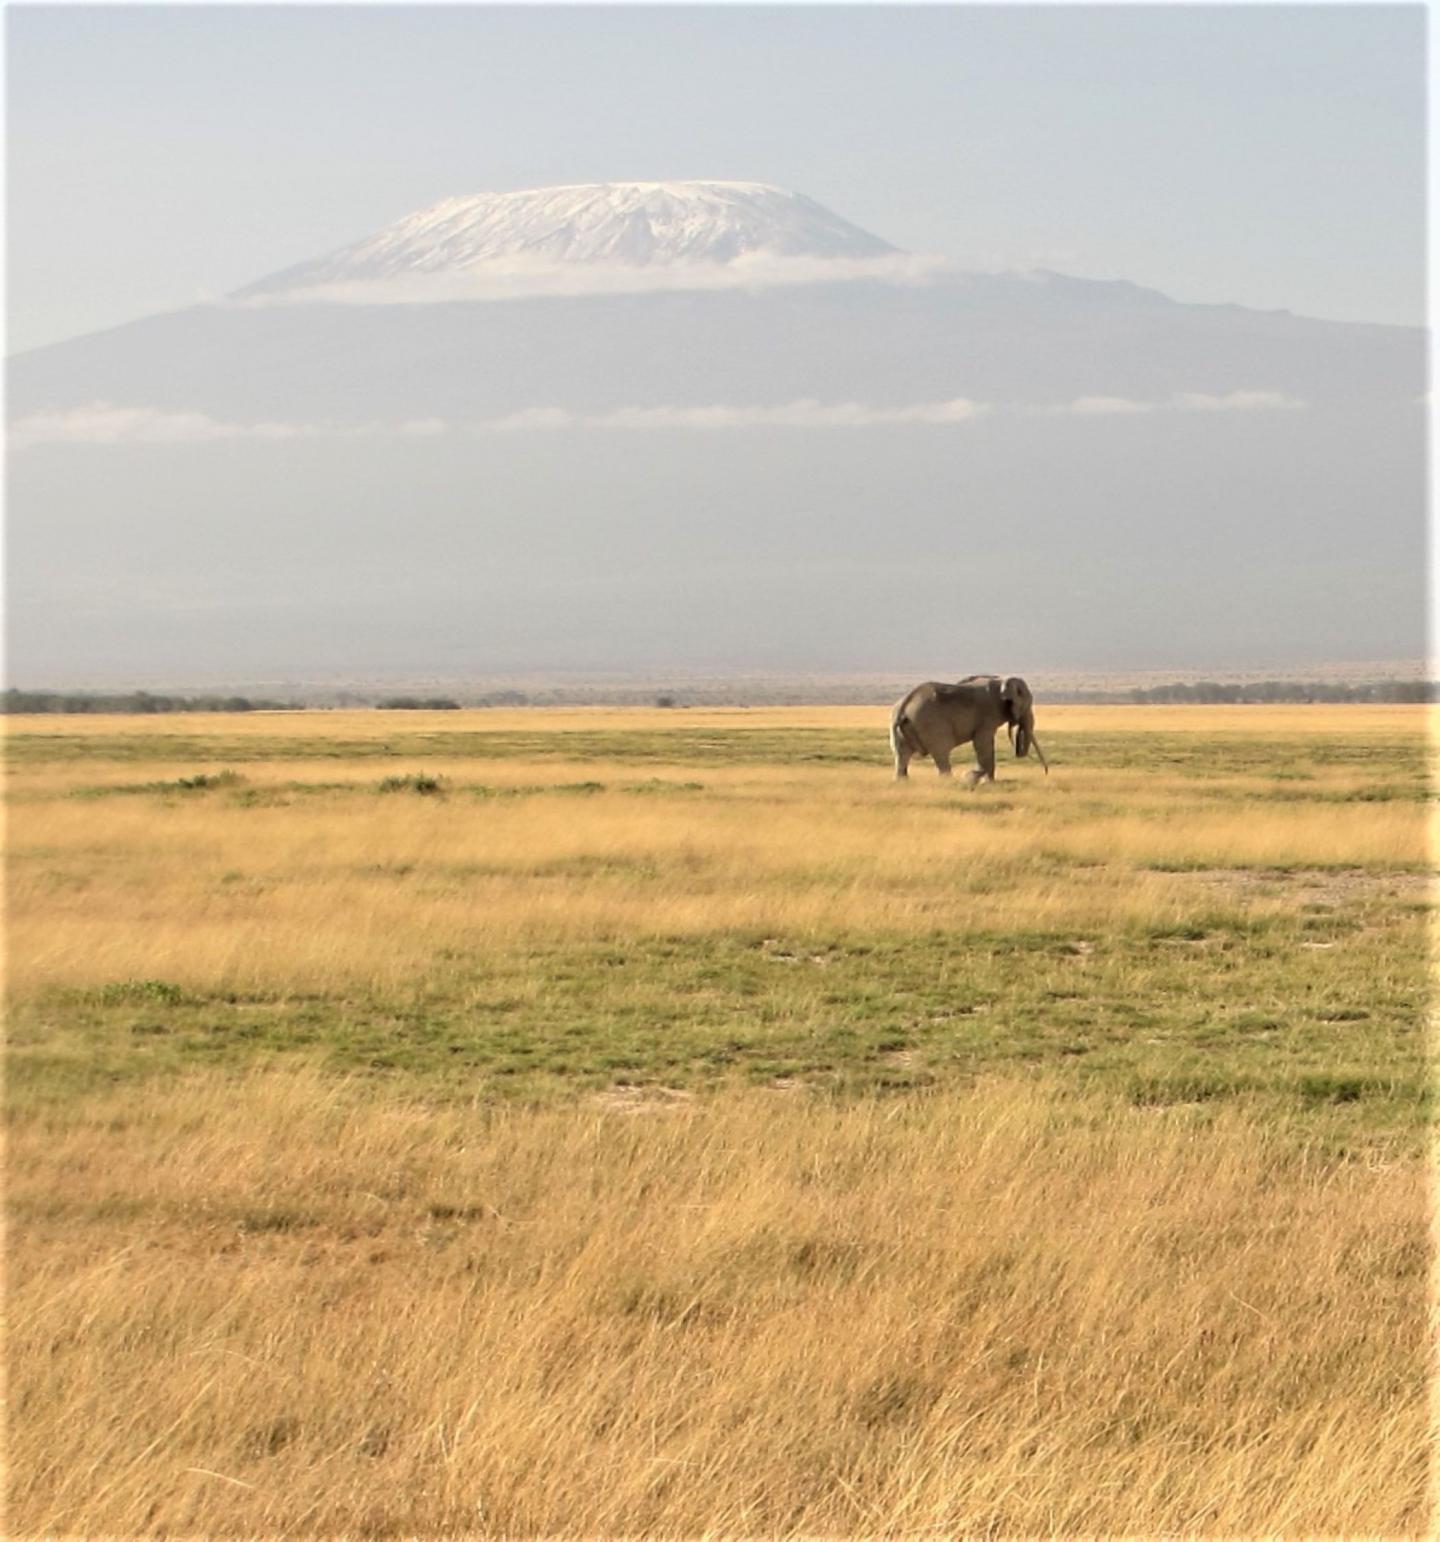 Amboseli National Park, Kenya: Due to climate change, glaciers on the Kilimanjaro are retreating.